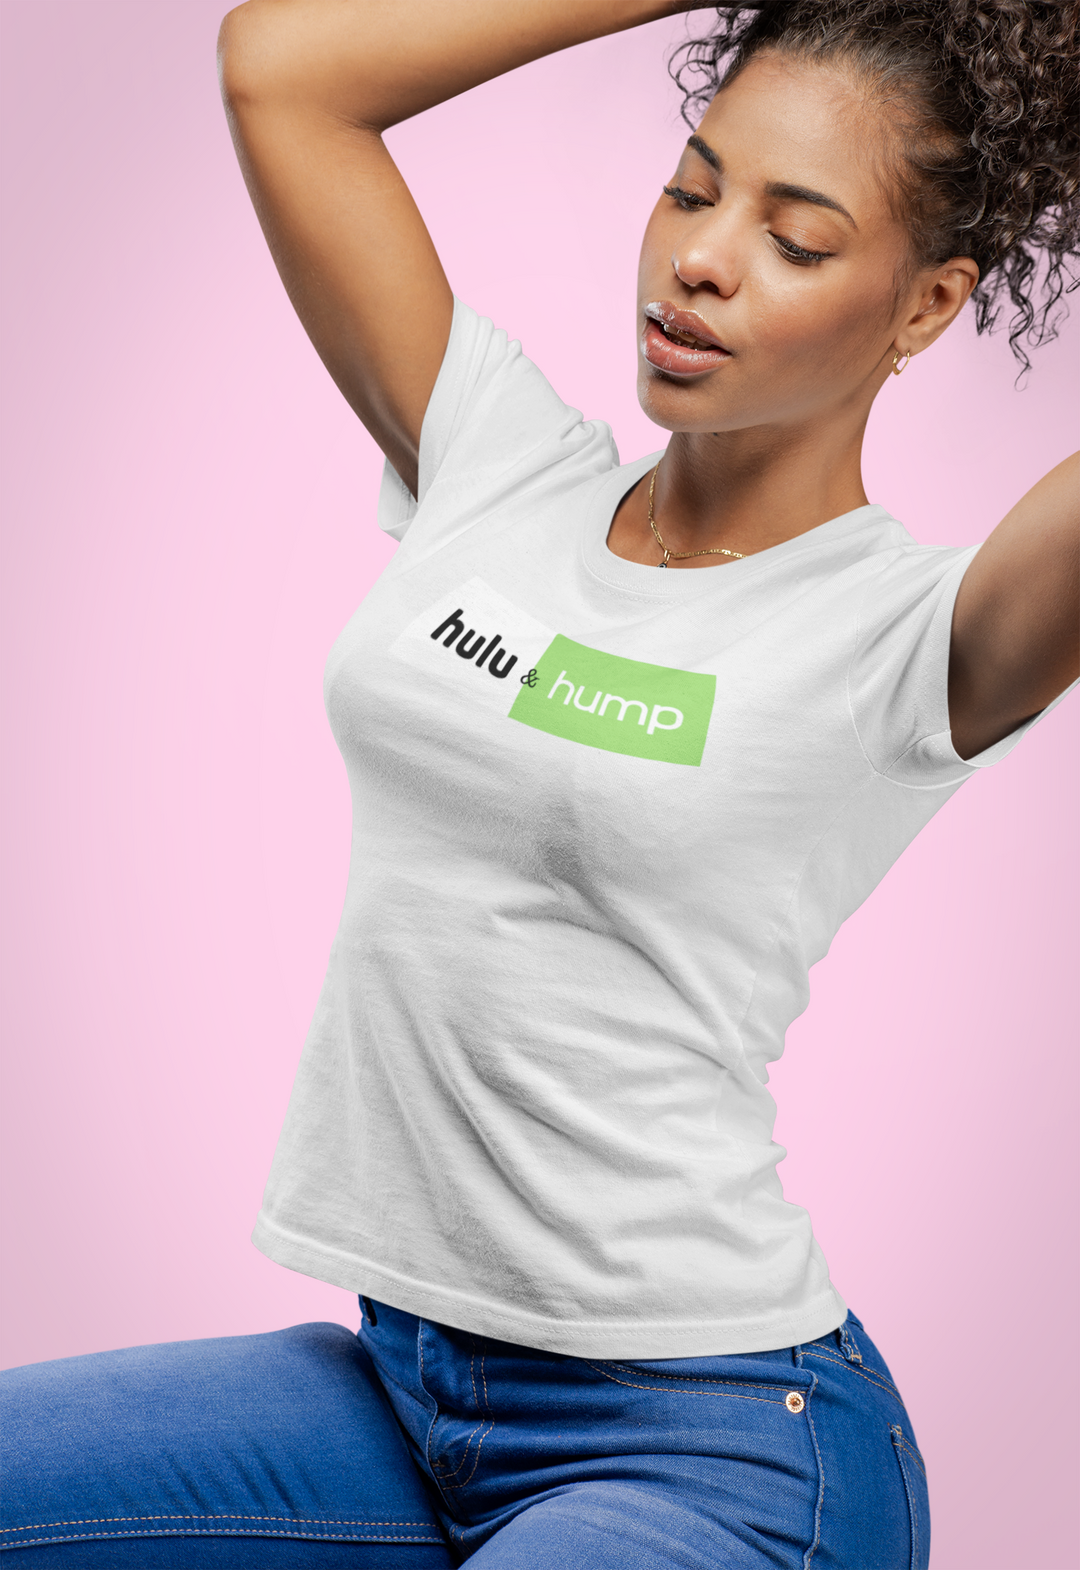 Hulu & Hump double-sided print Women’s Premium Organic T-Shirt (Eco-friendly) - ENE TRENDS -custom designed-personalized-near me-shirt-clothes-dress-amazon-top-luxury-fashion-men-women-kids-streetwear-IG